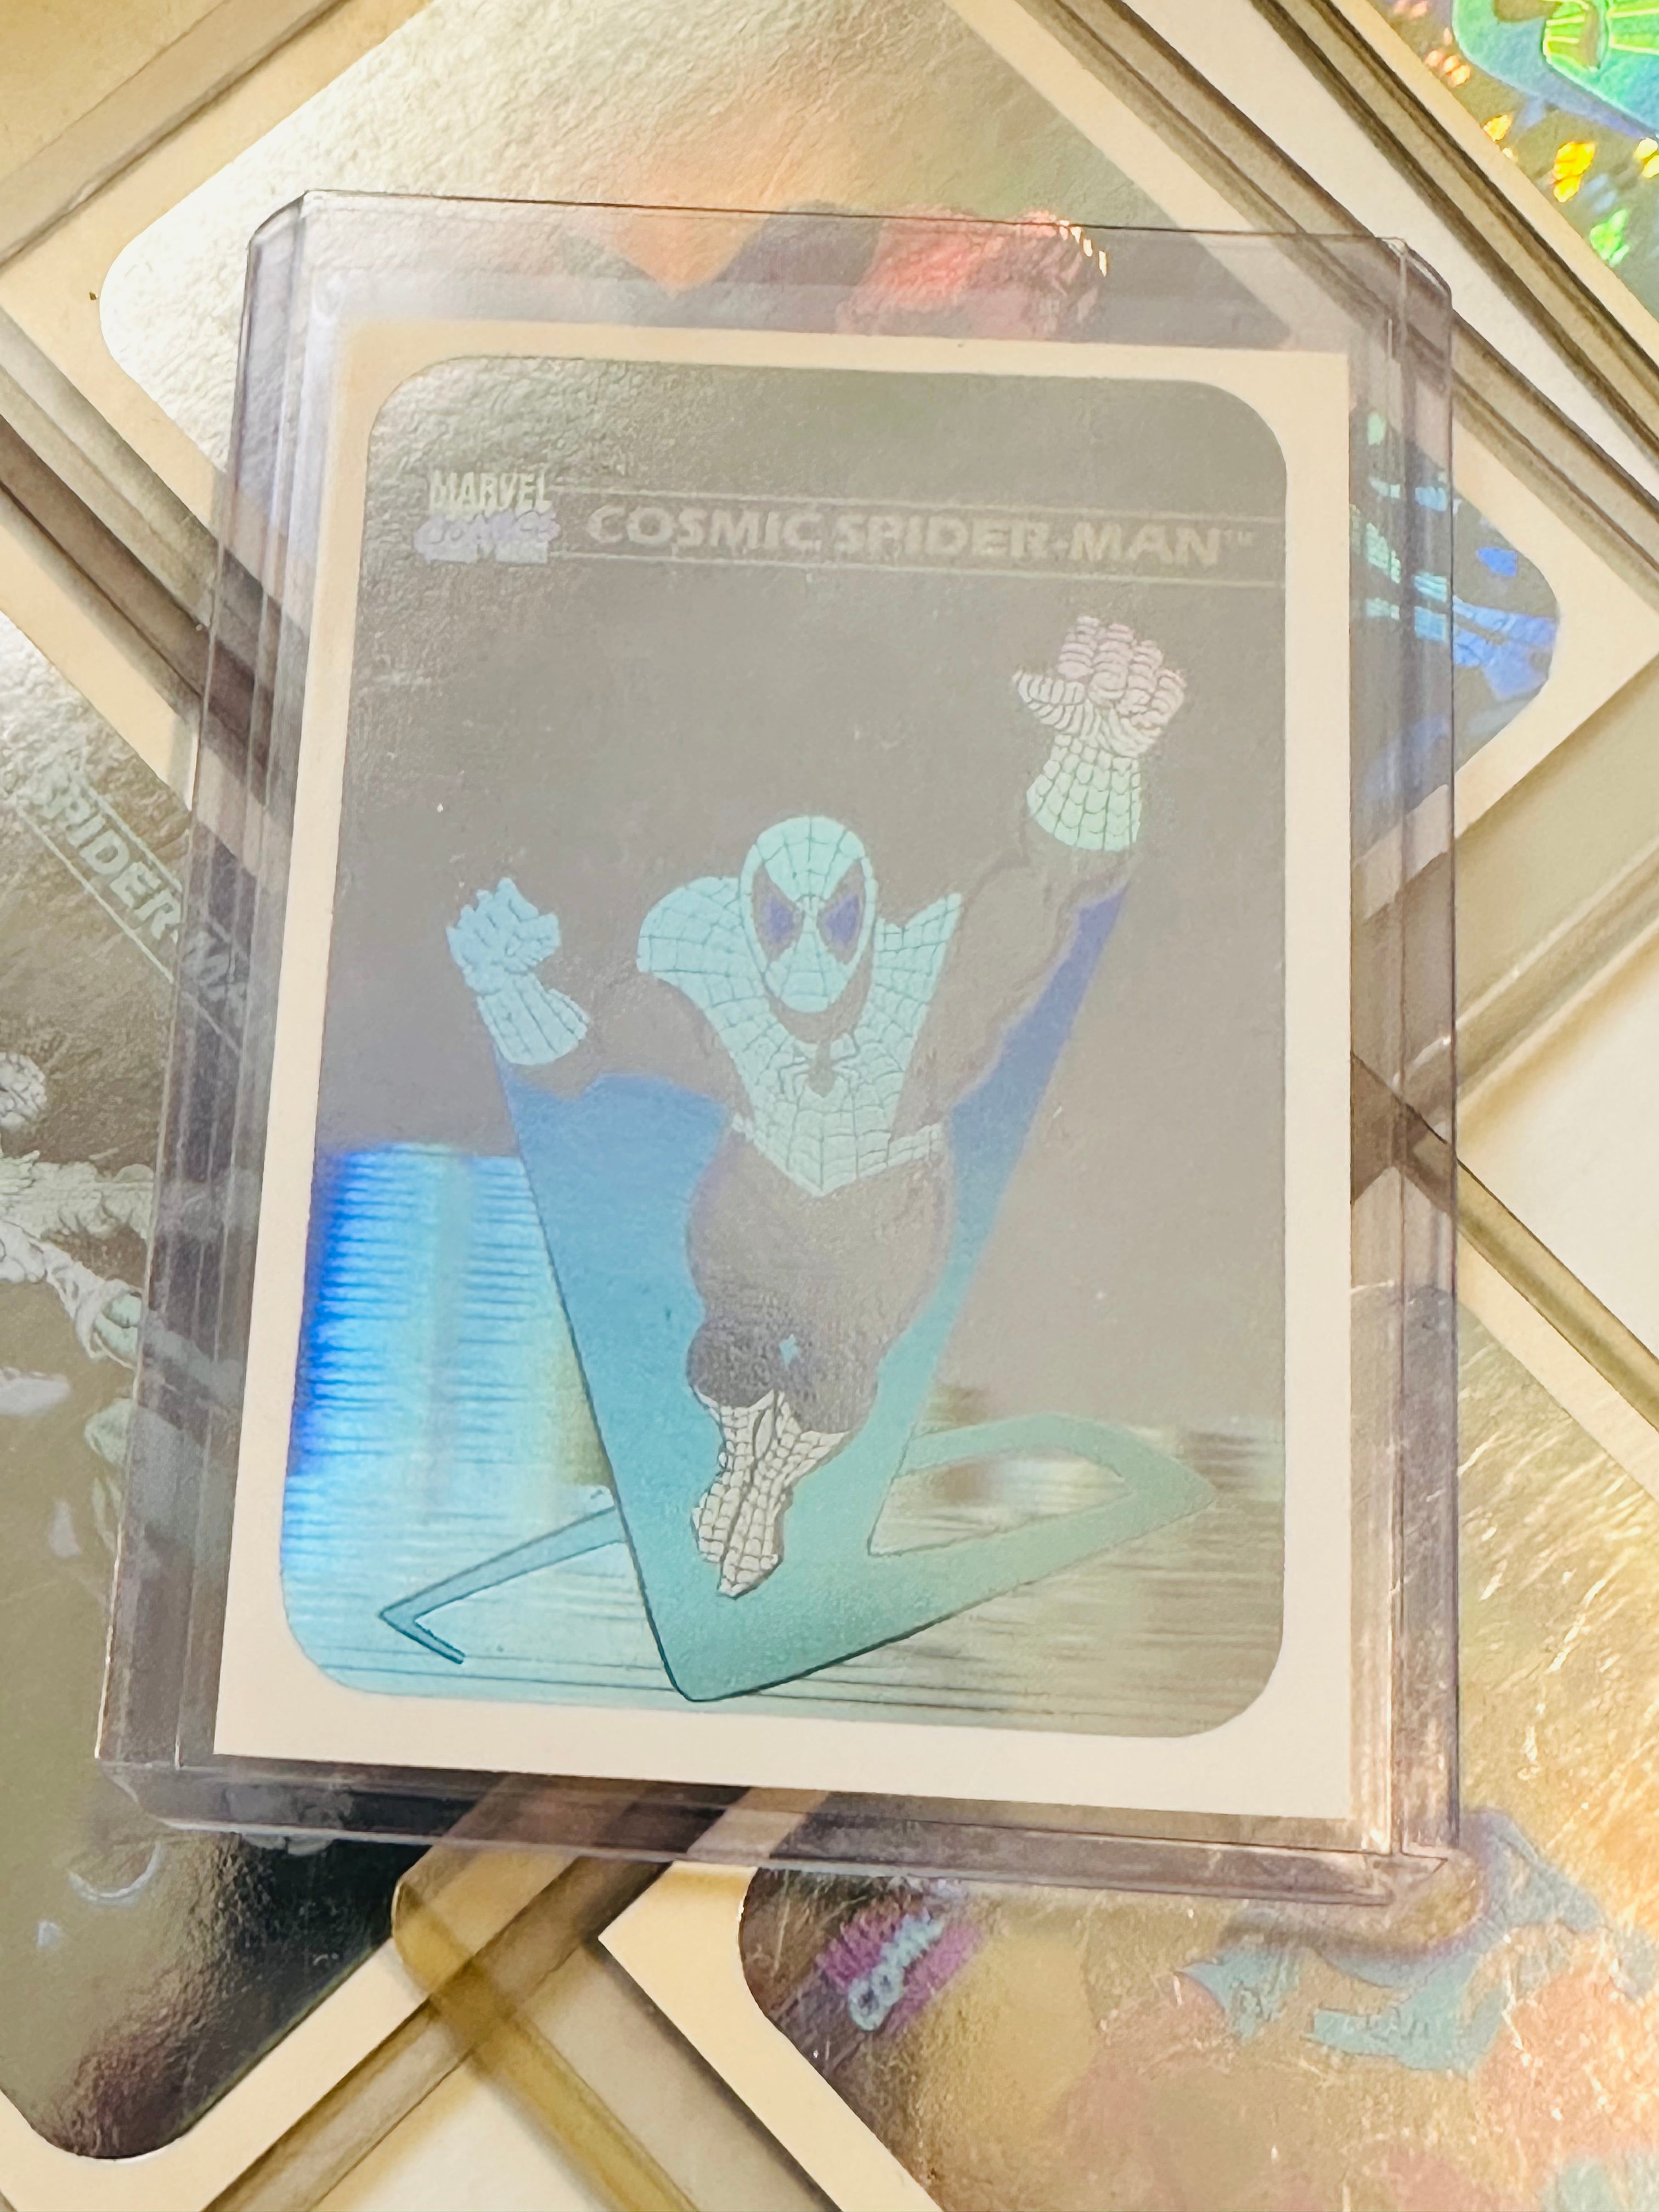 Marvel universe series 1 rare 5 cards hologram insert set 1990